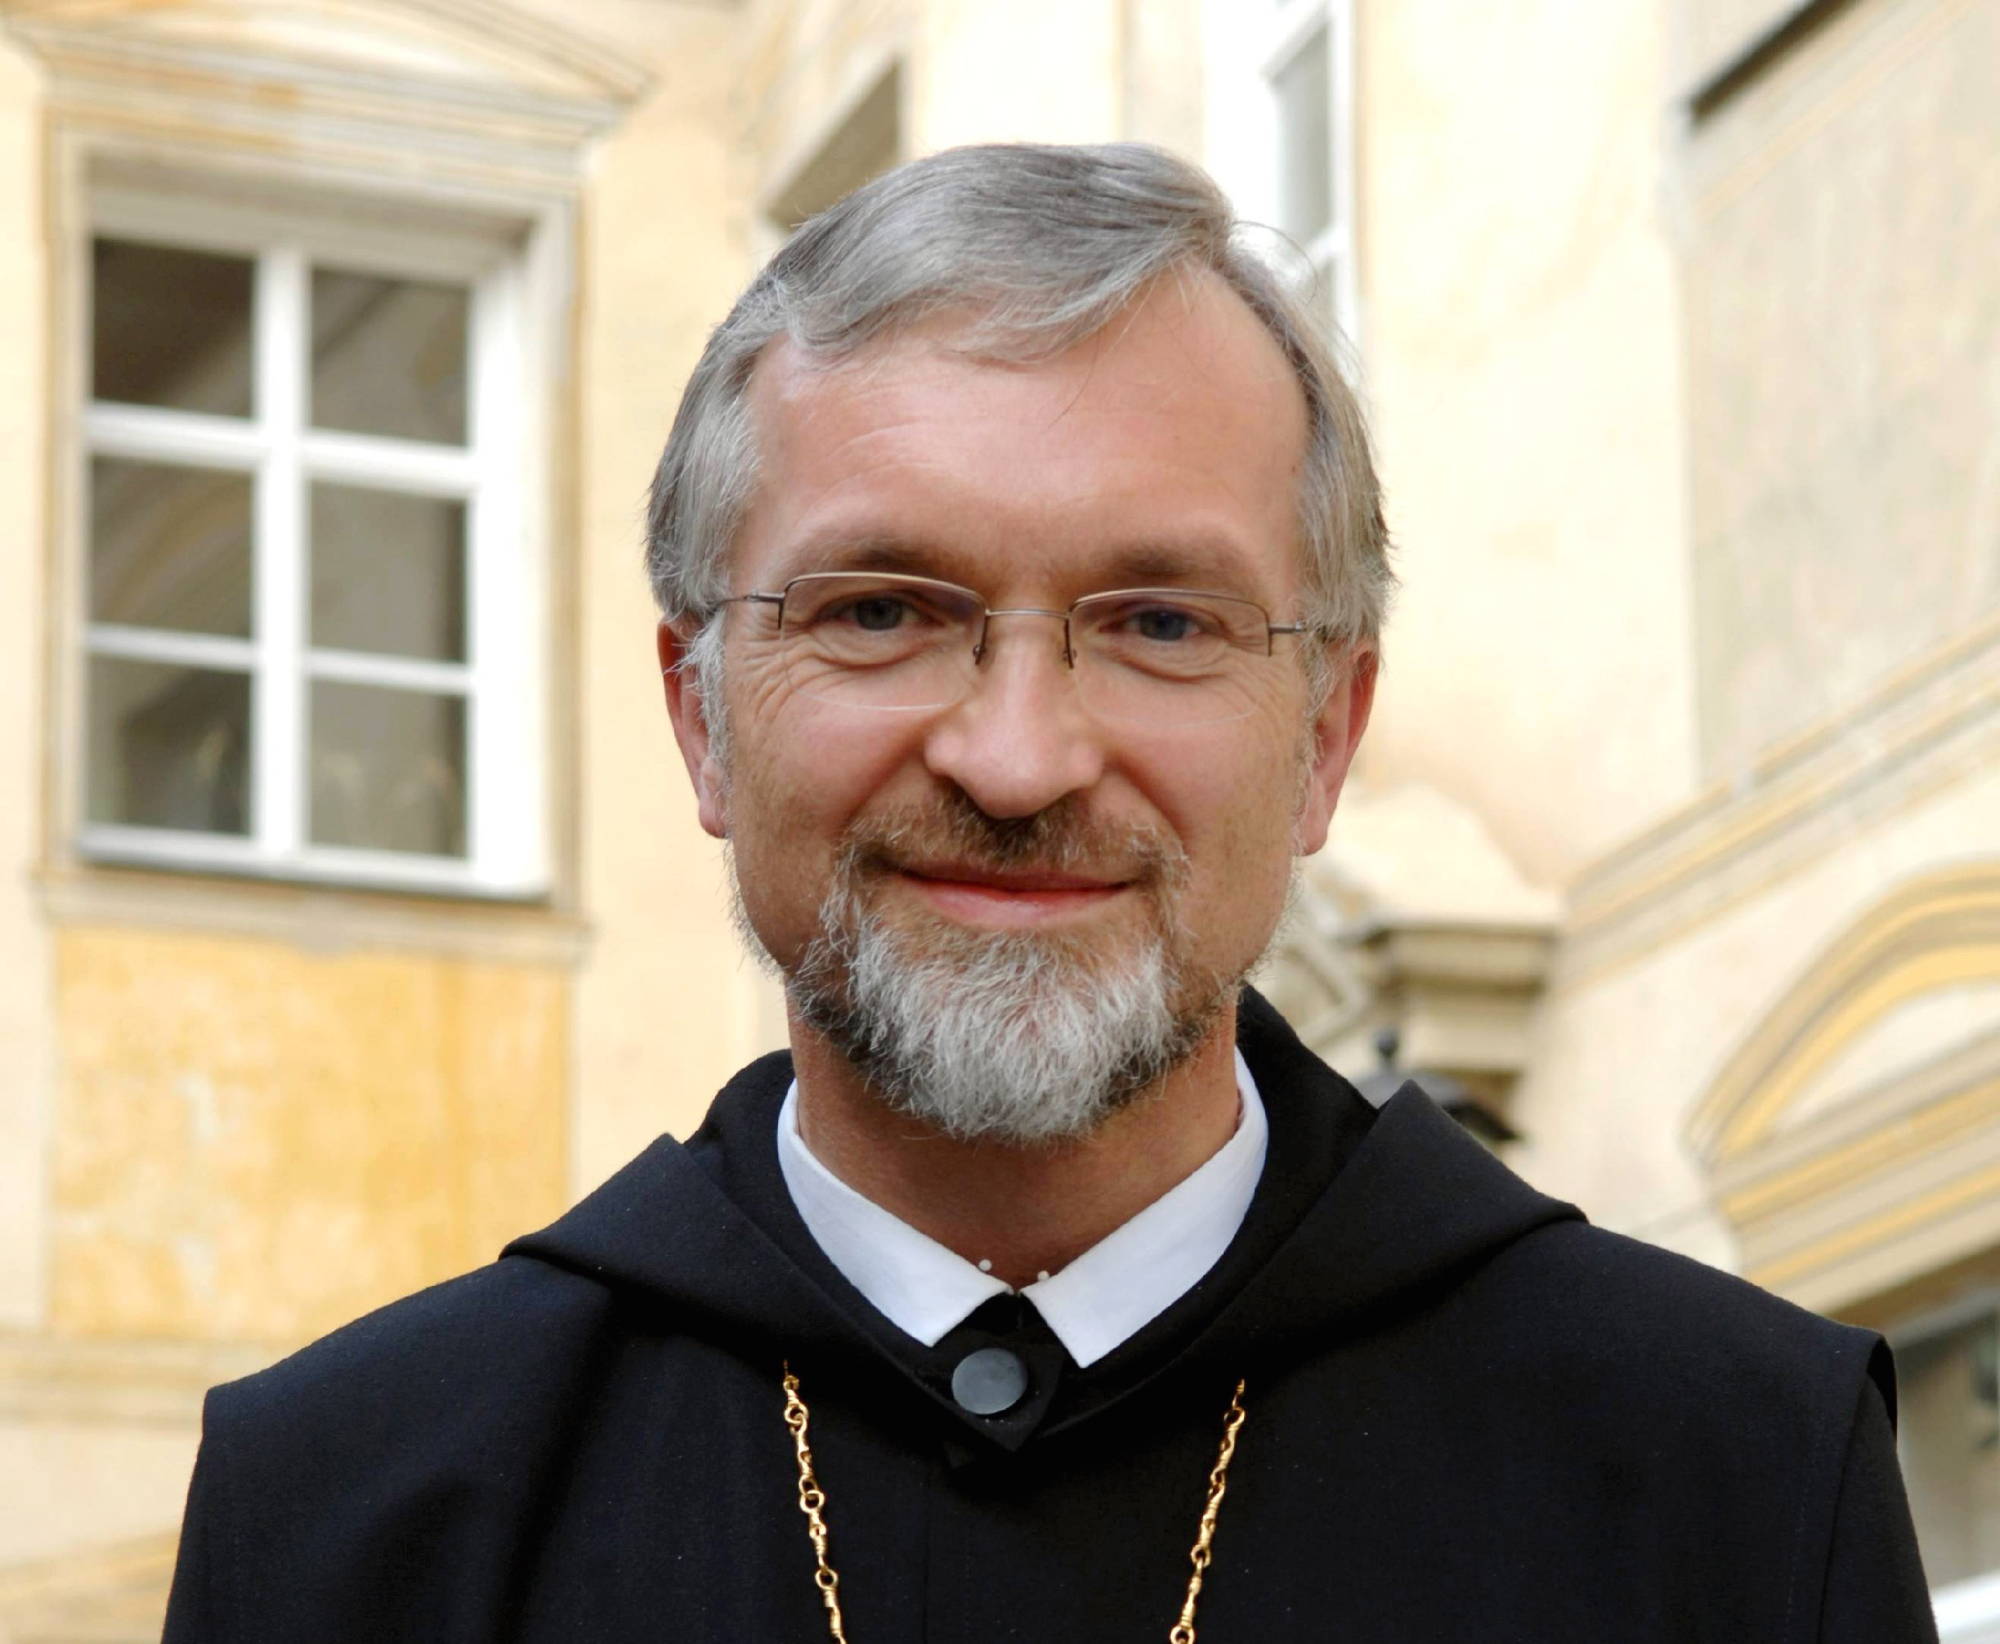 German bishop suggests abolishing church tax